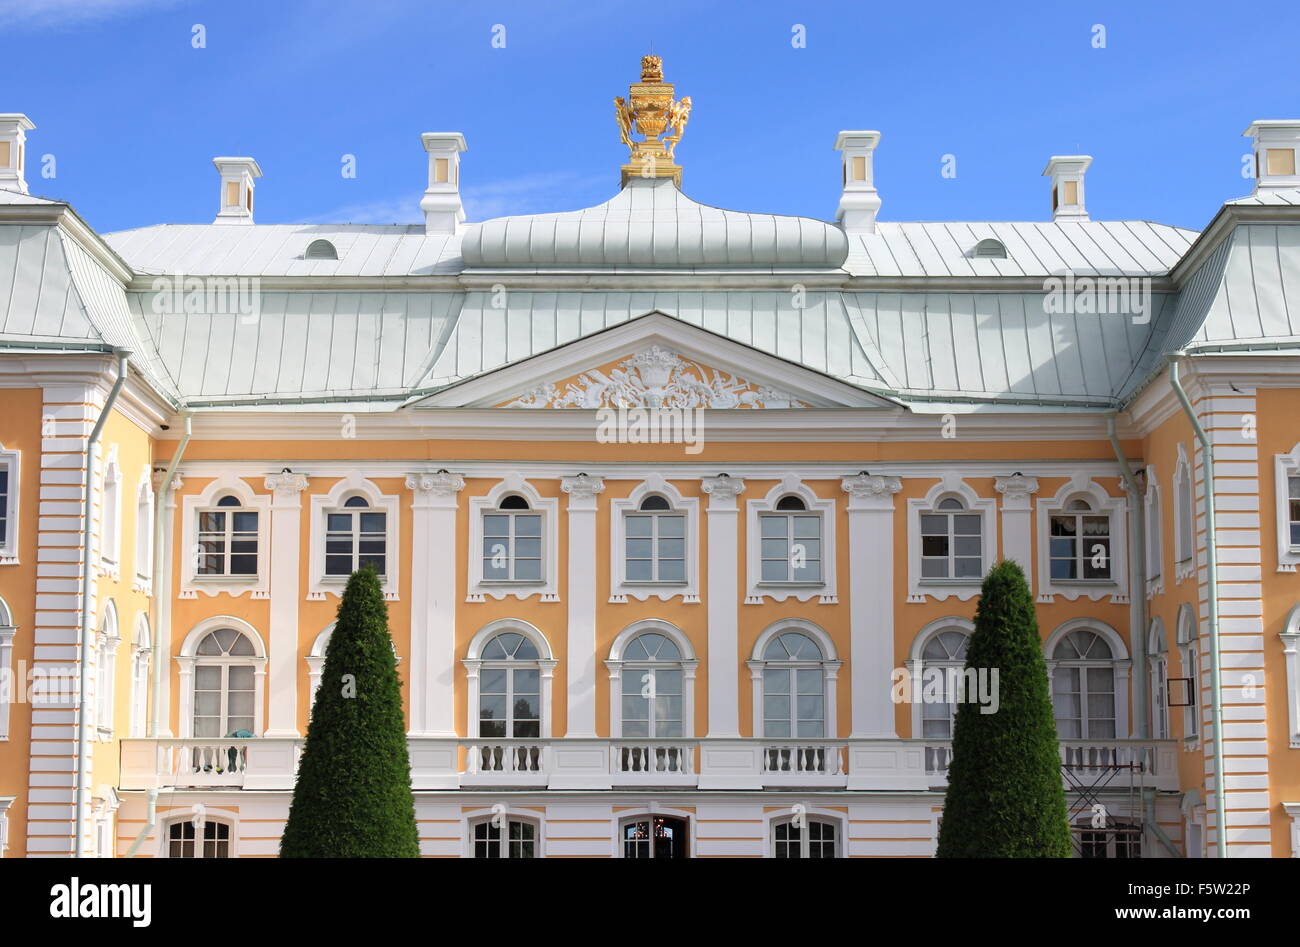 Facade of Peterhof Palace in St. Petersburg, Russia Stock Photo